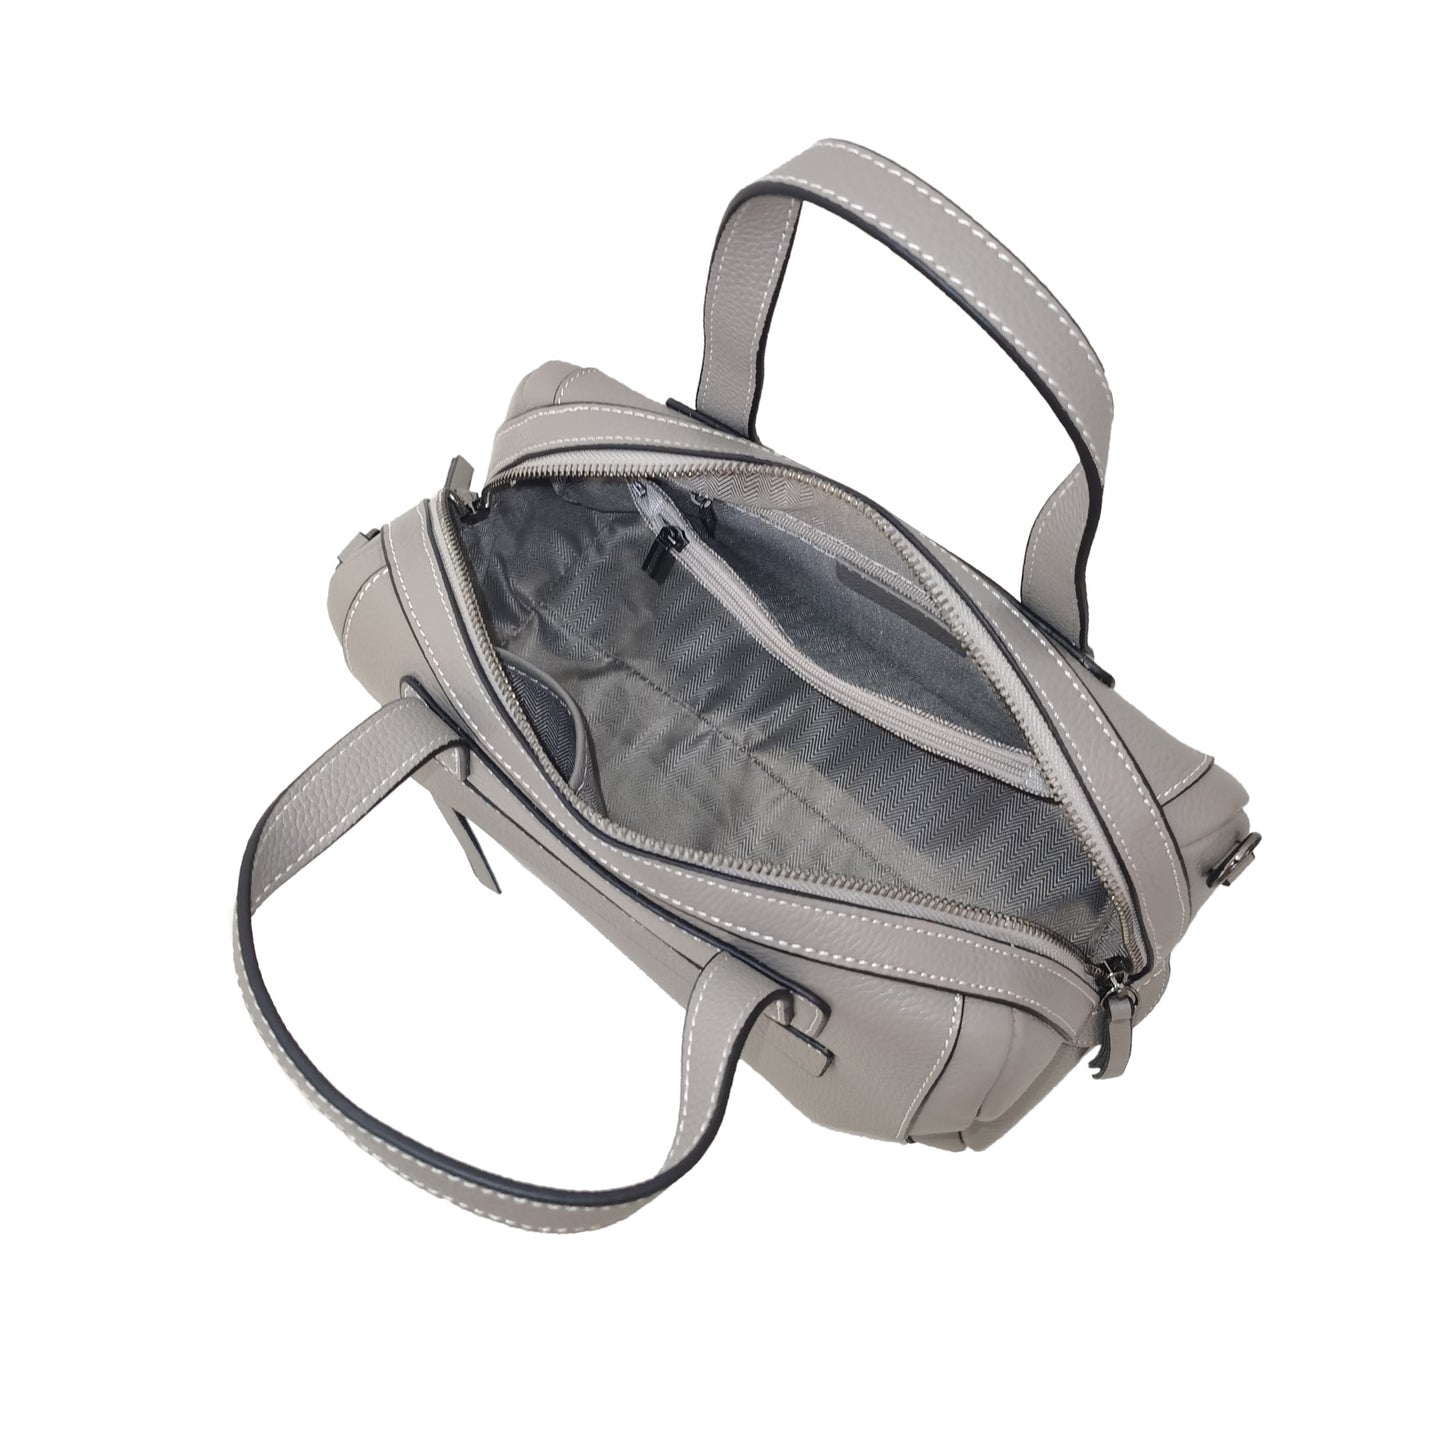 Women's genuine cowhide leather handbag Box V2 design with 2 straps